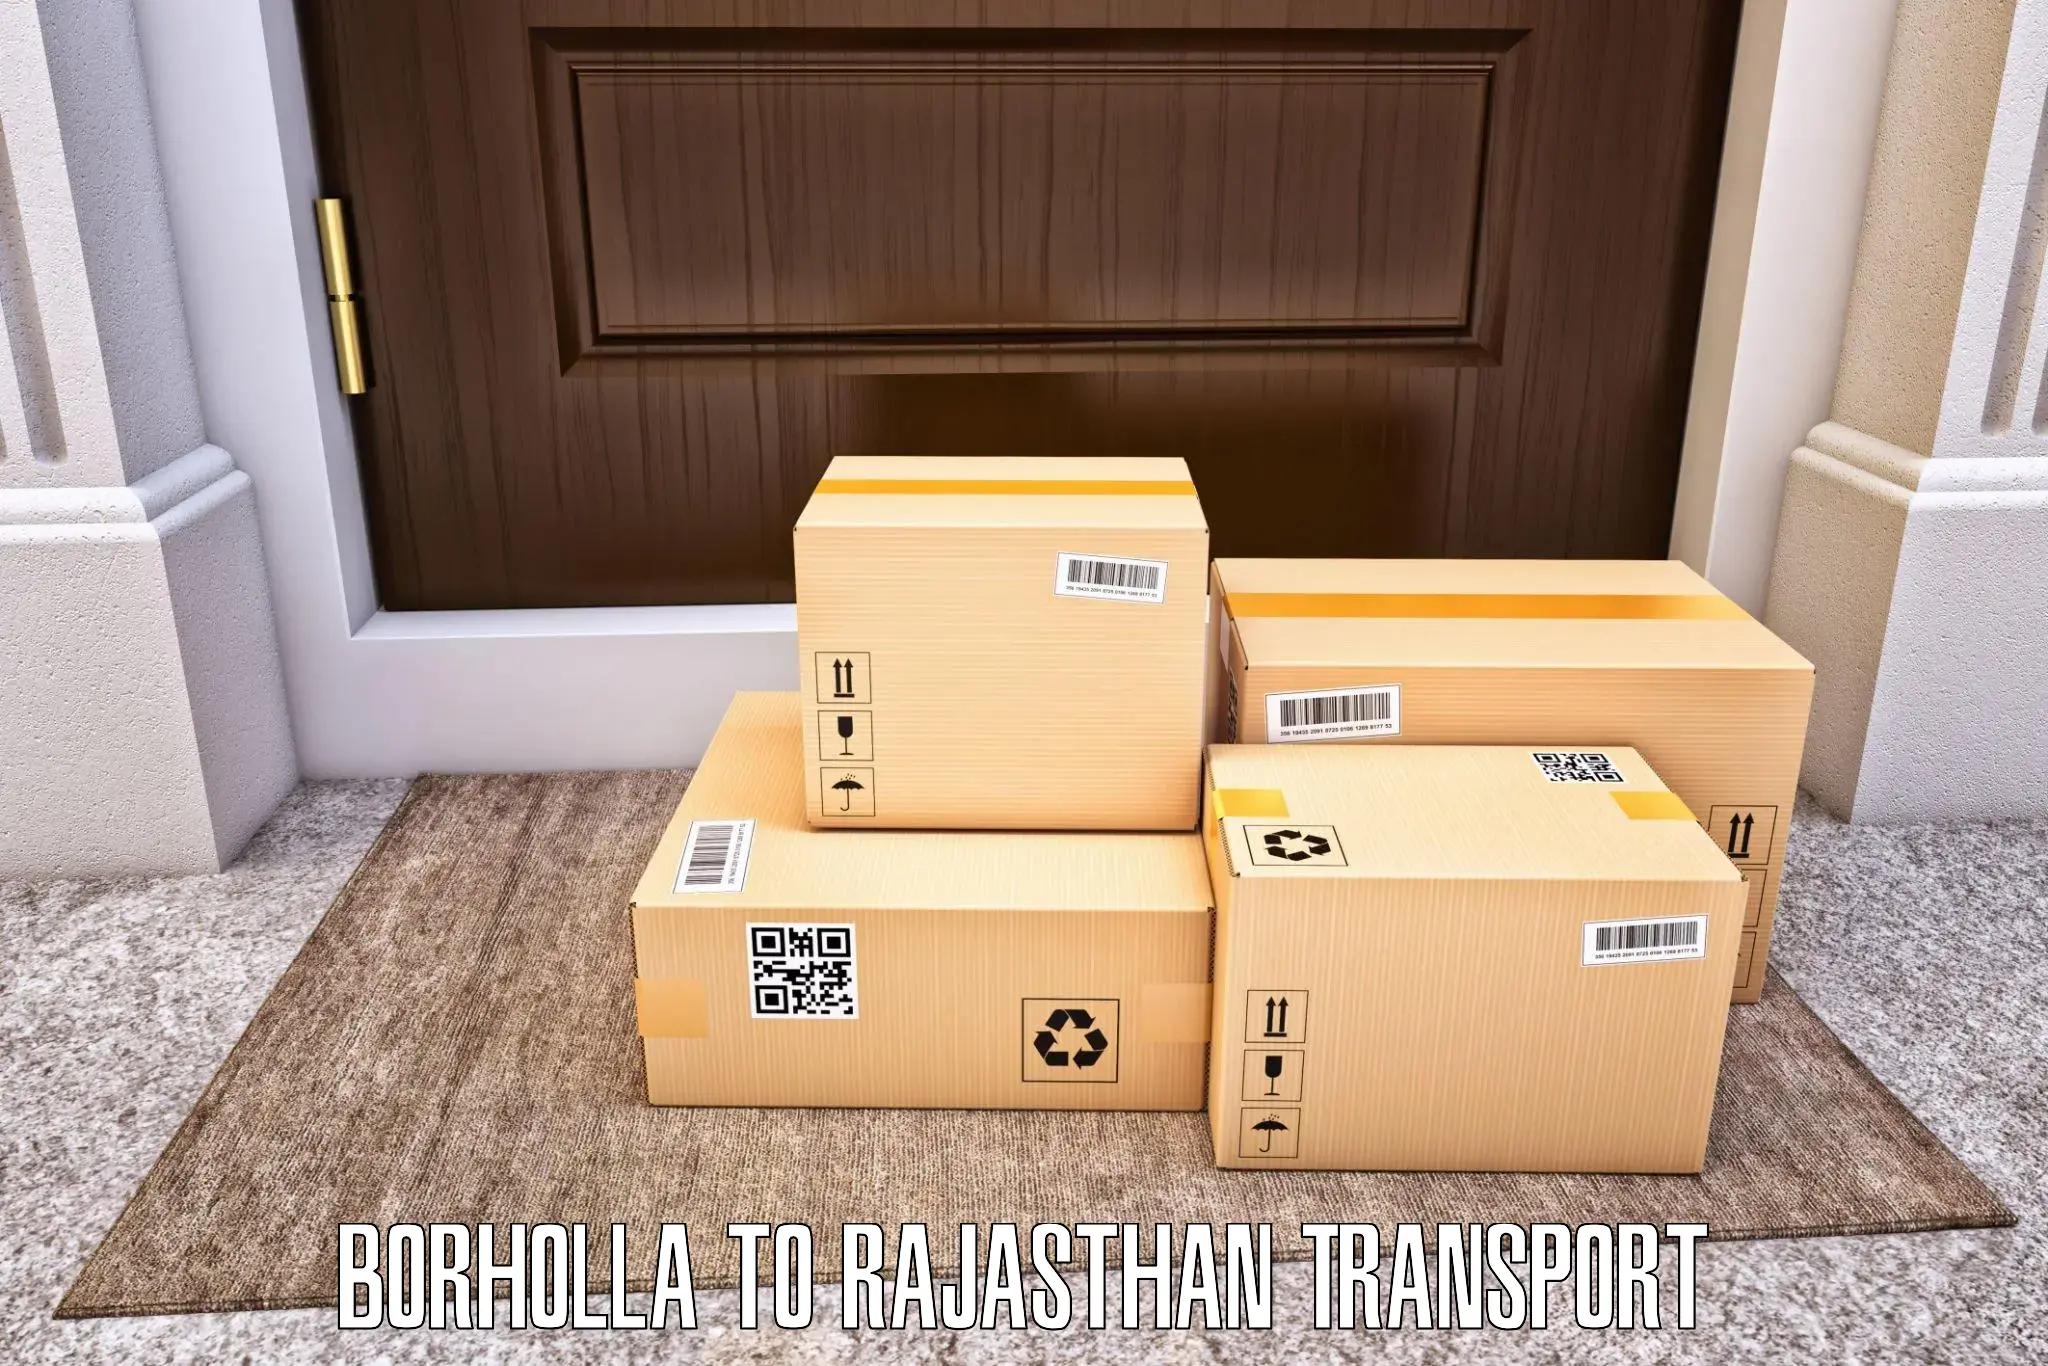 Transport in sharing Borholla to Alwar